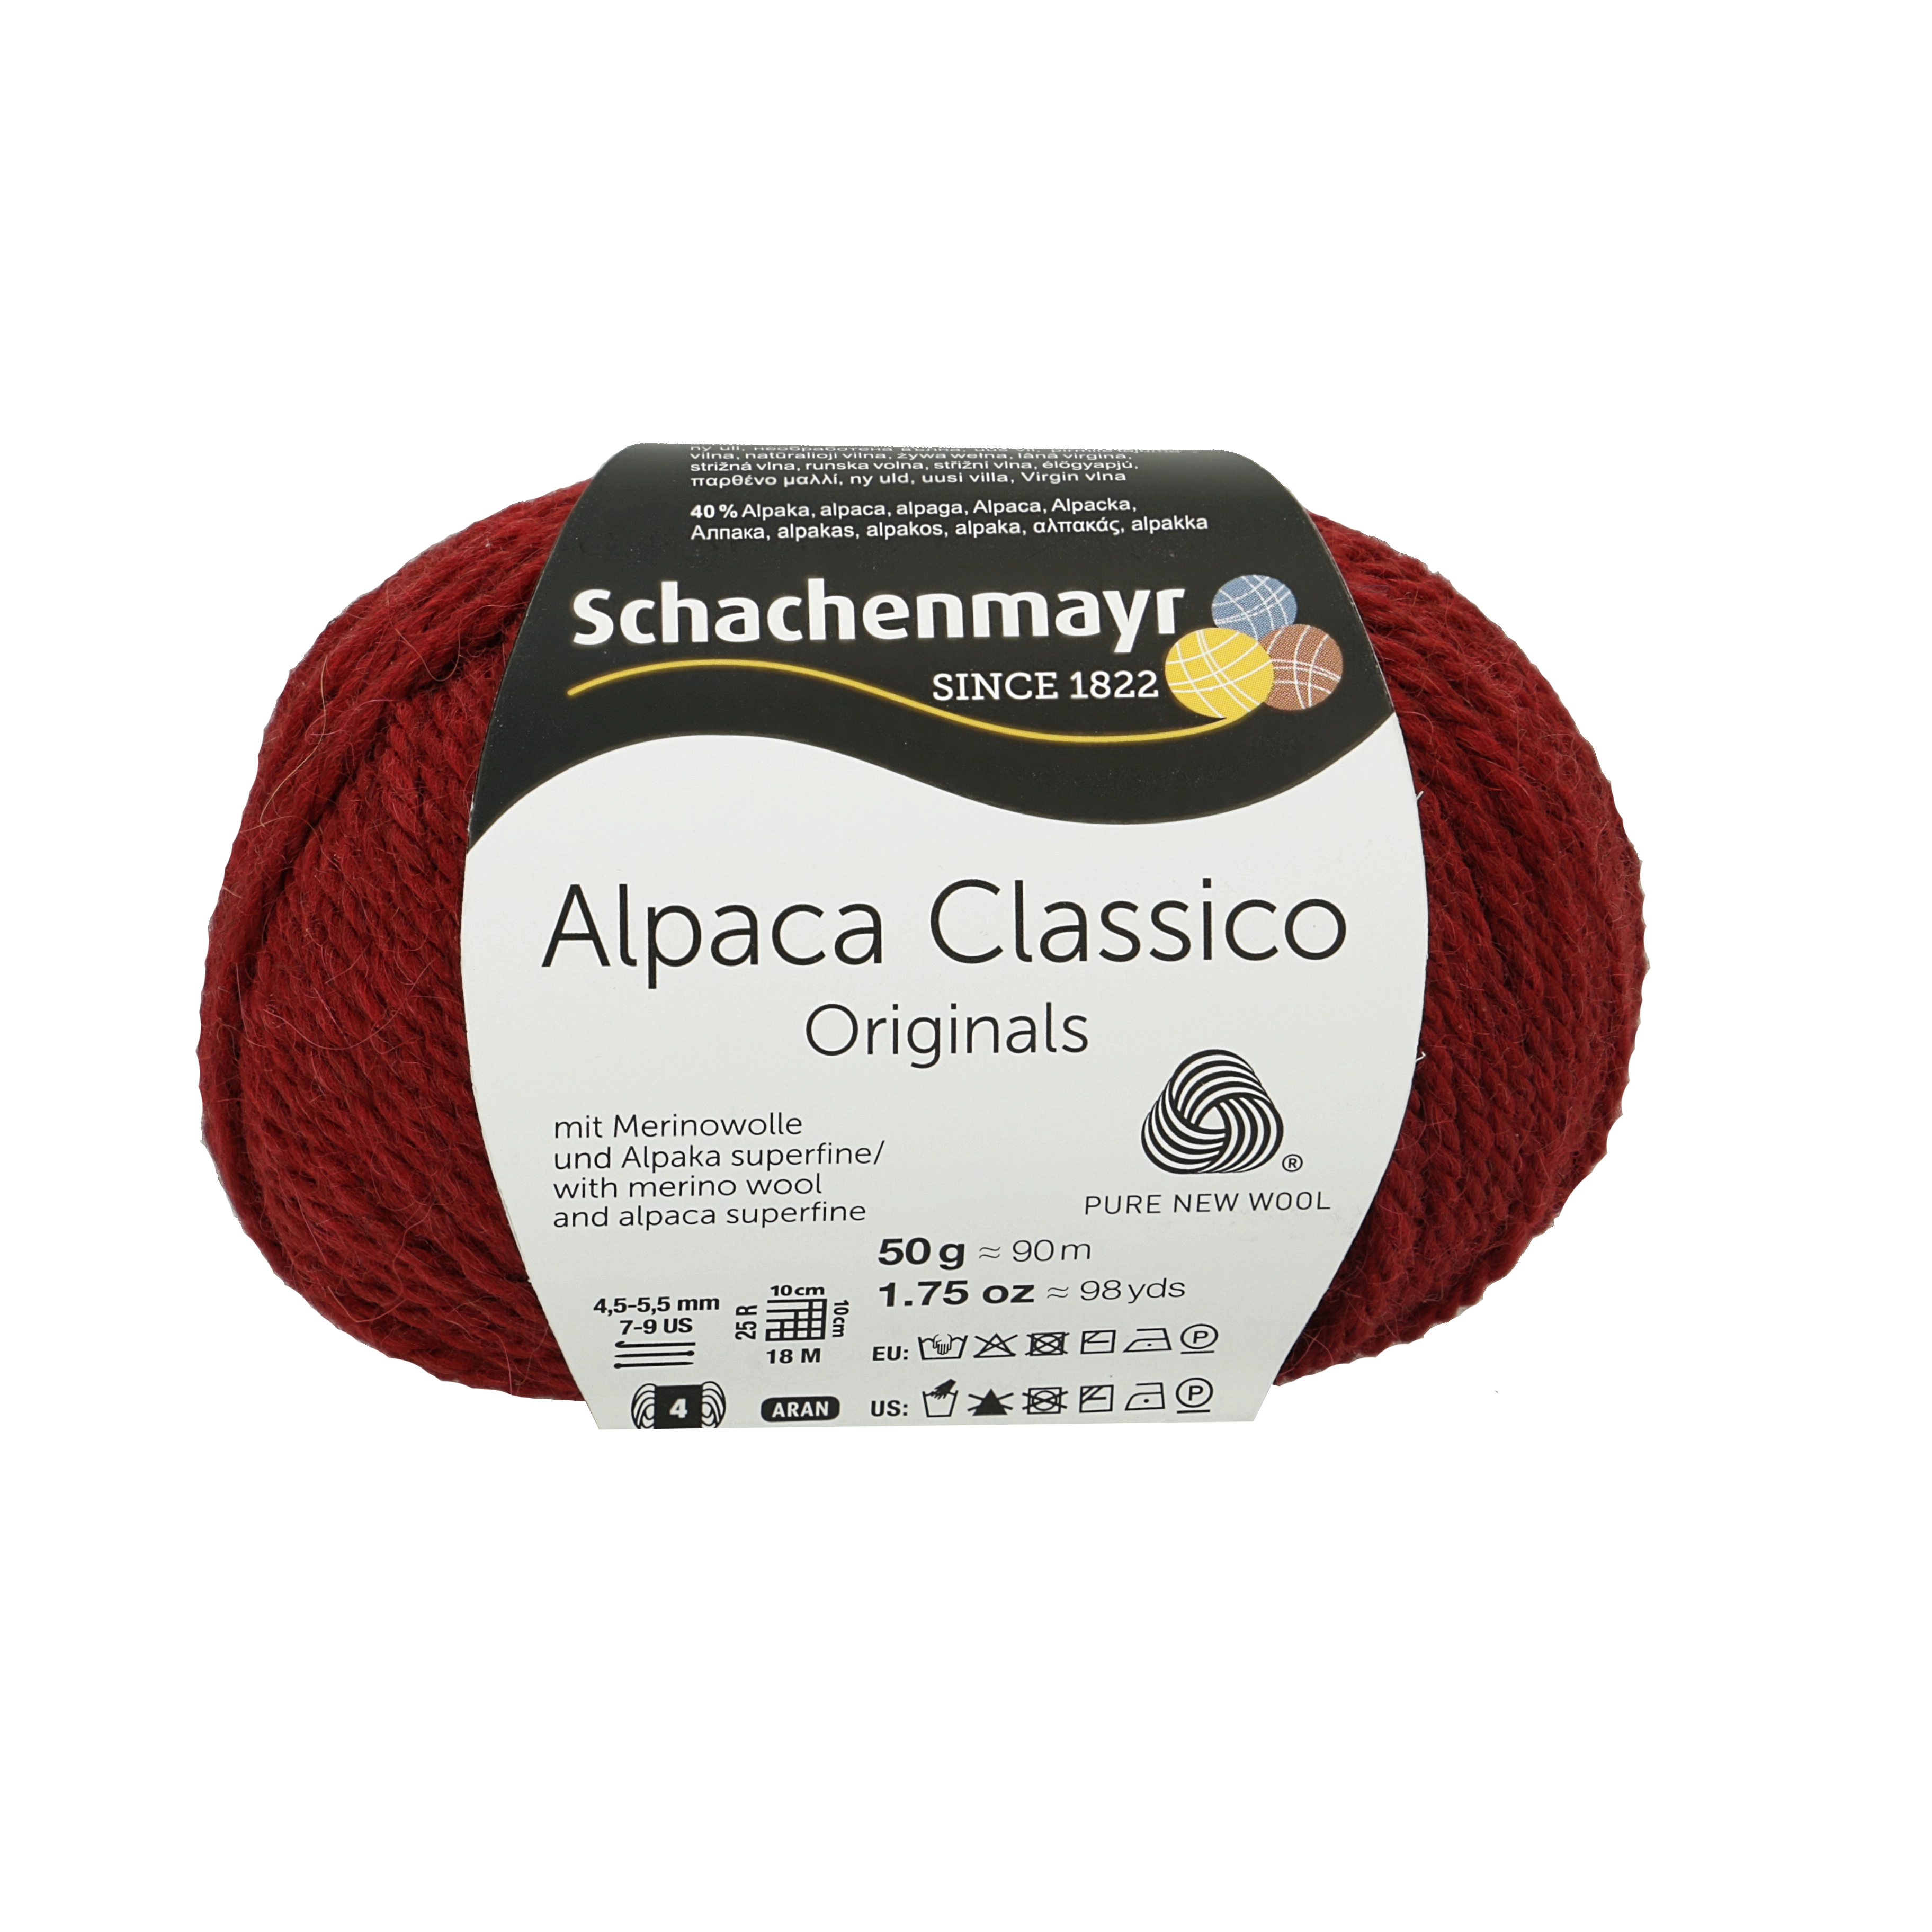 Alpaca Classico rubint vörös 00030